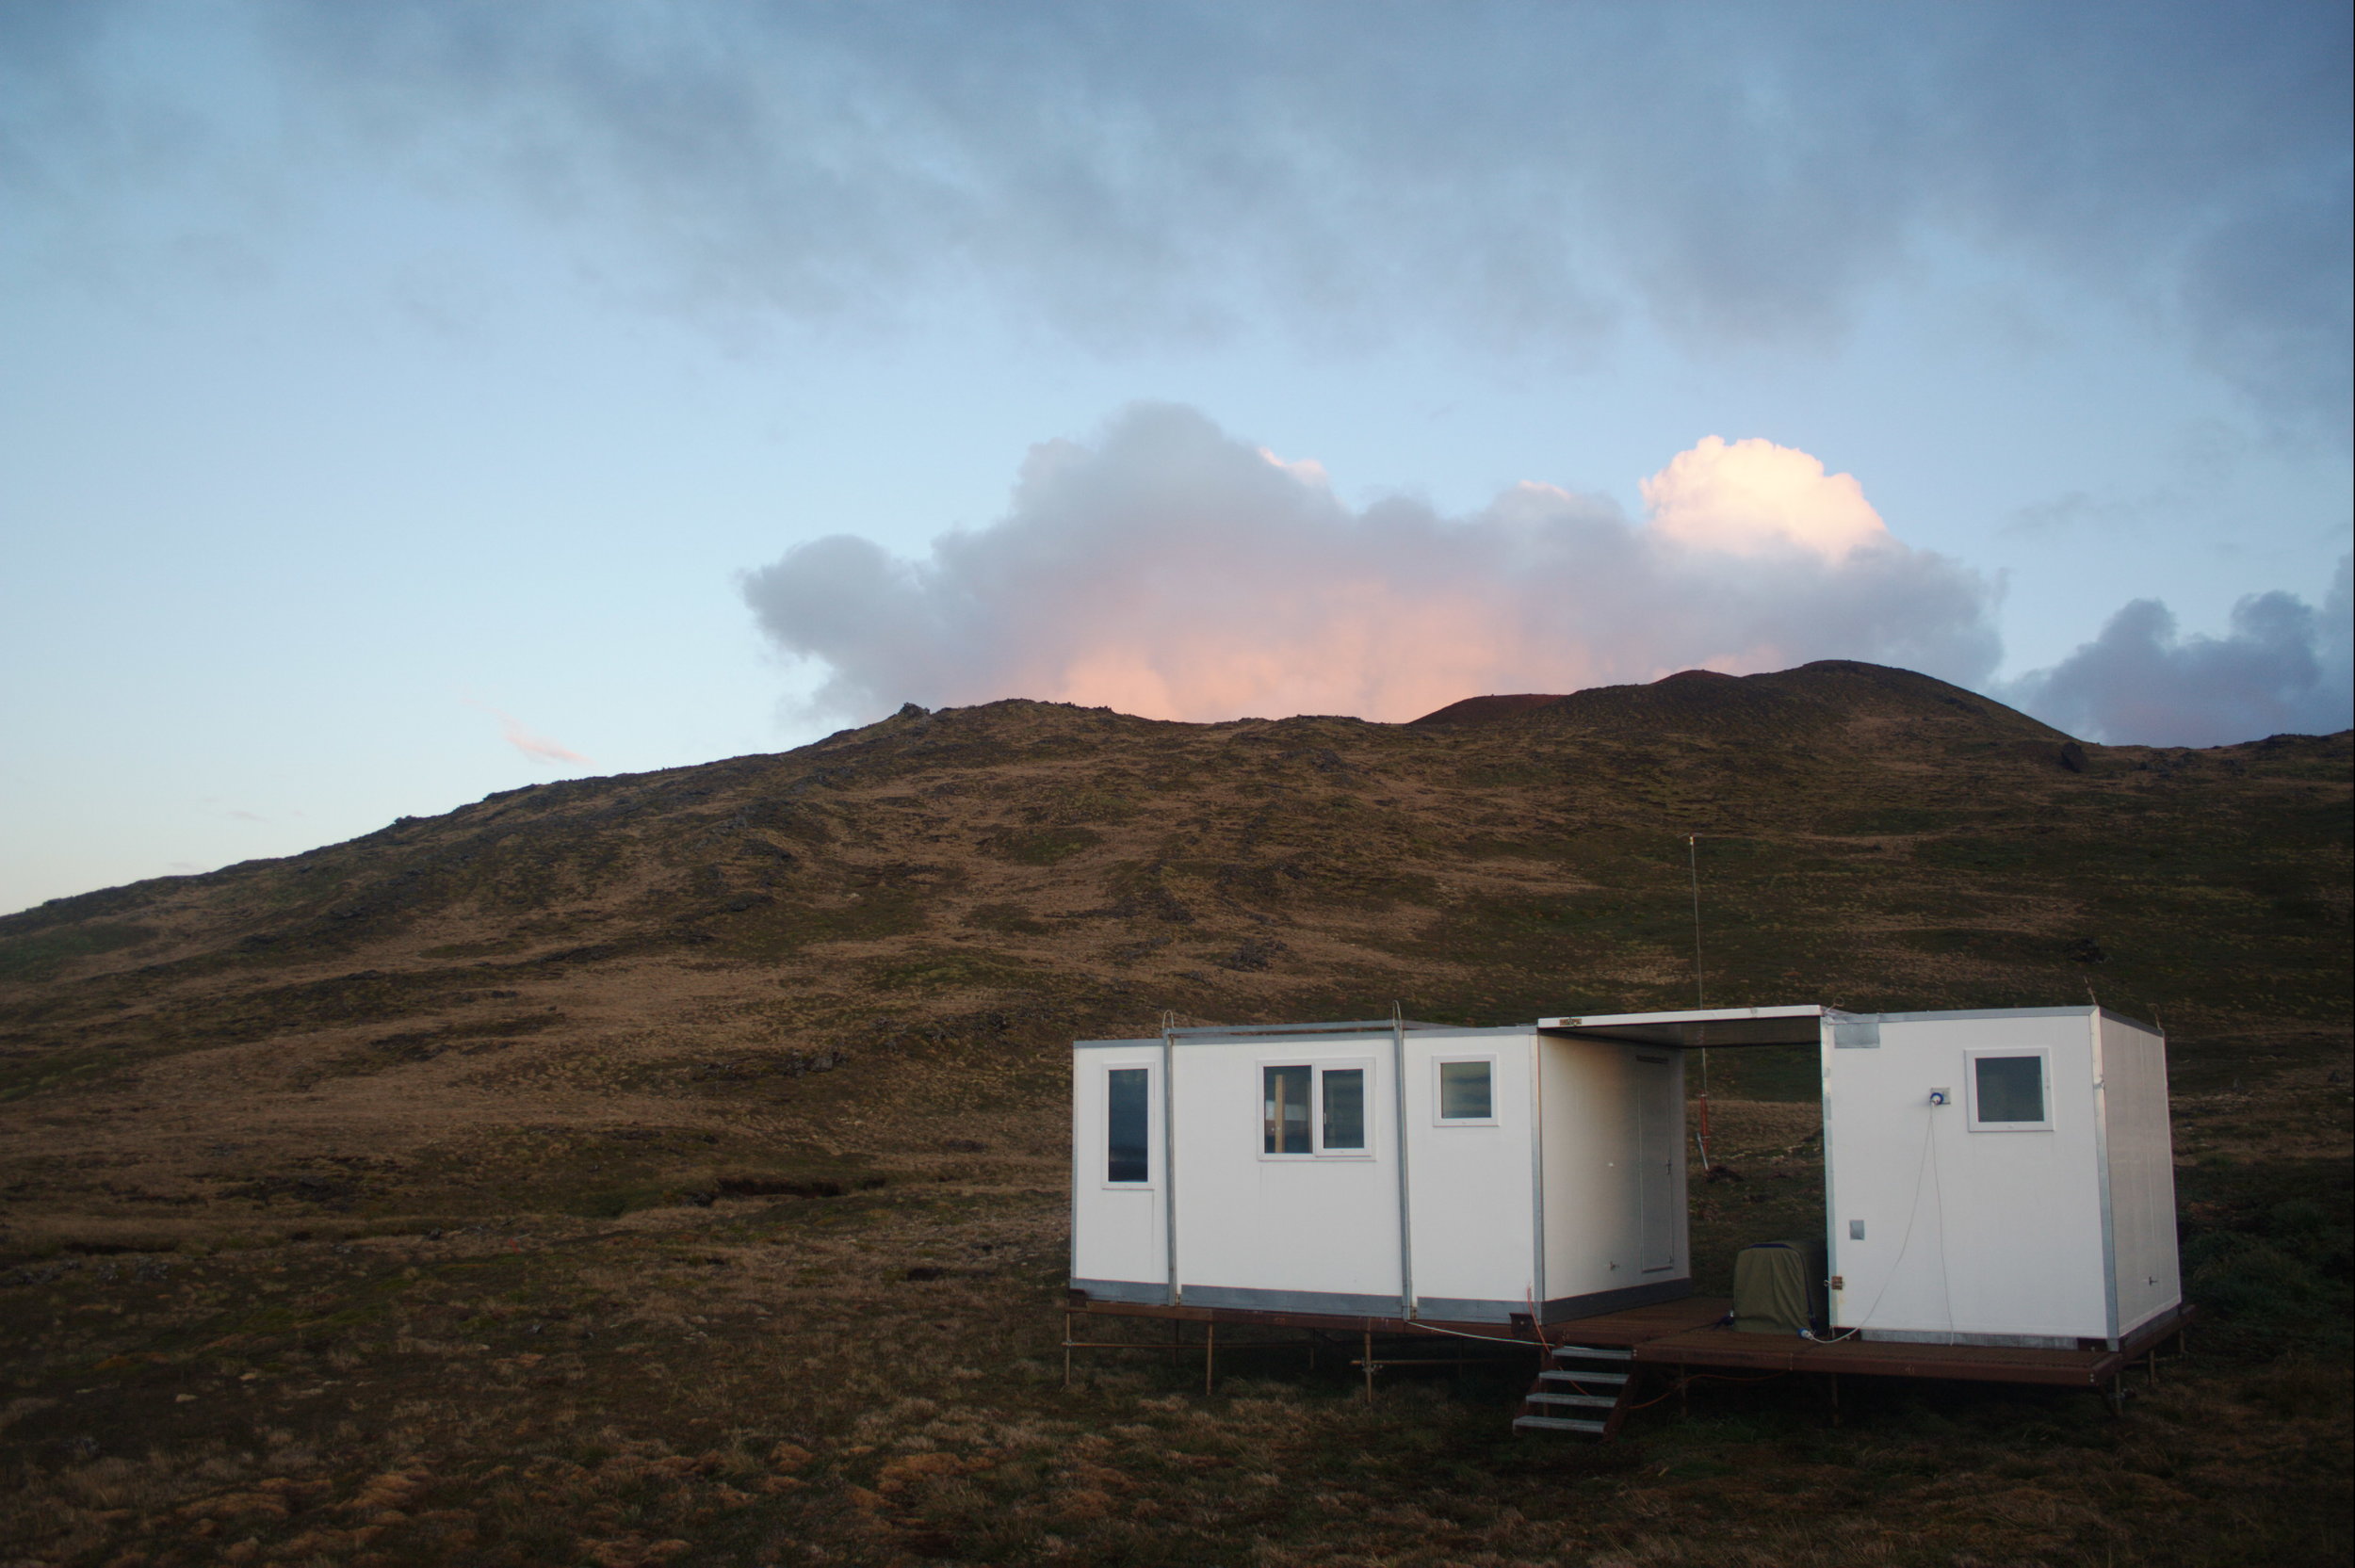  Current Cape Davis modular hut - 2007 onwards. 